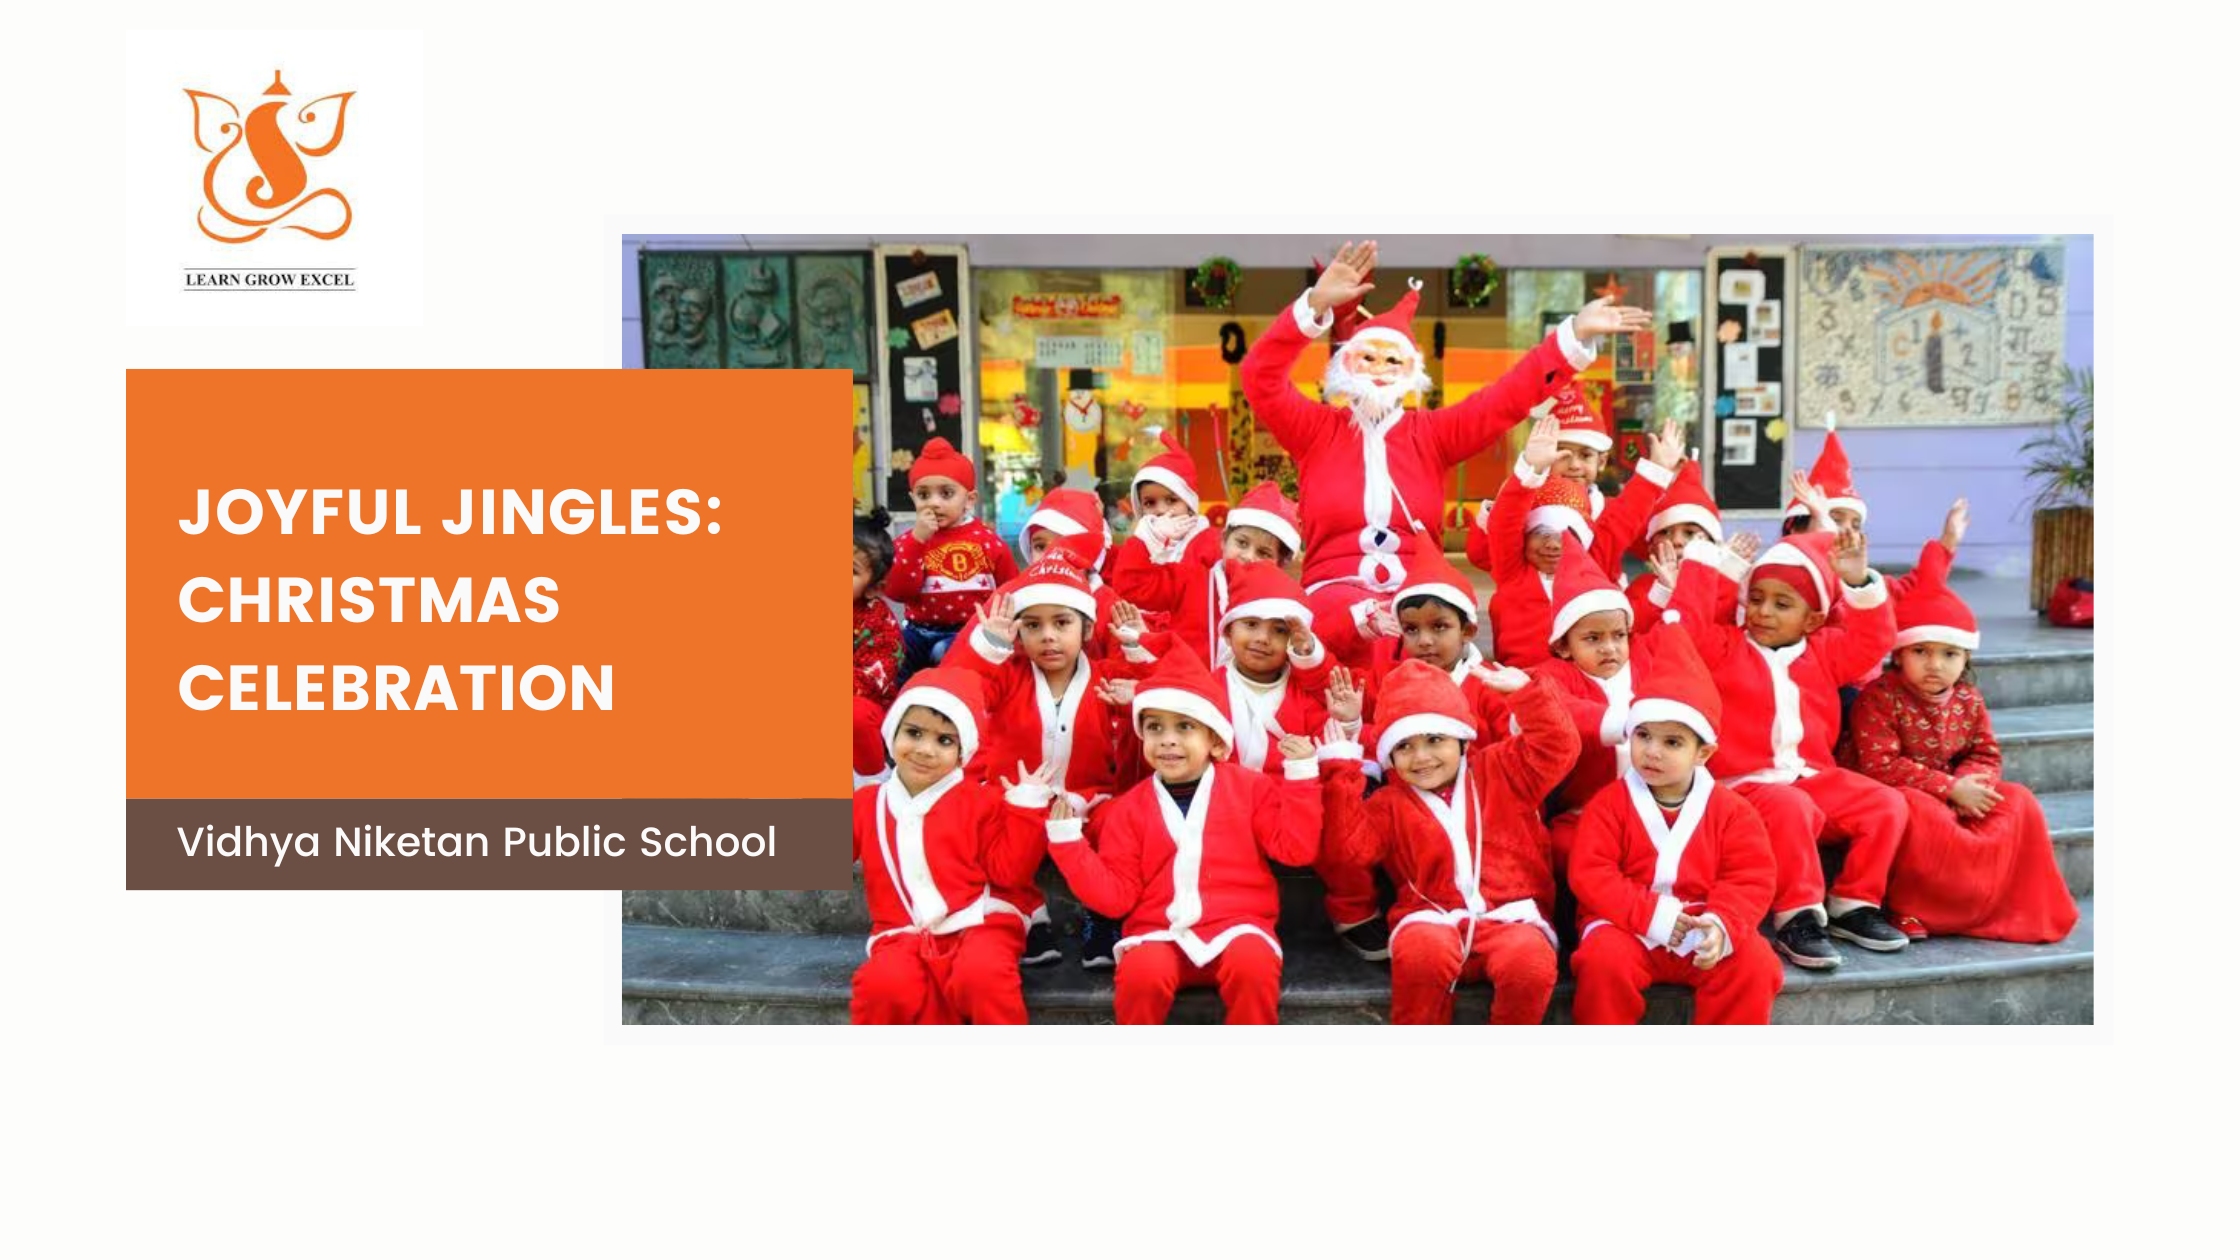 Joyful Jingles: Christmas Celebrations at Vidhya Niketan Public School